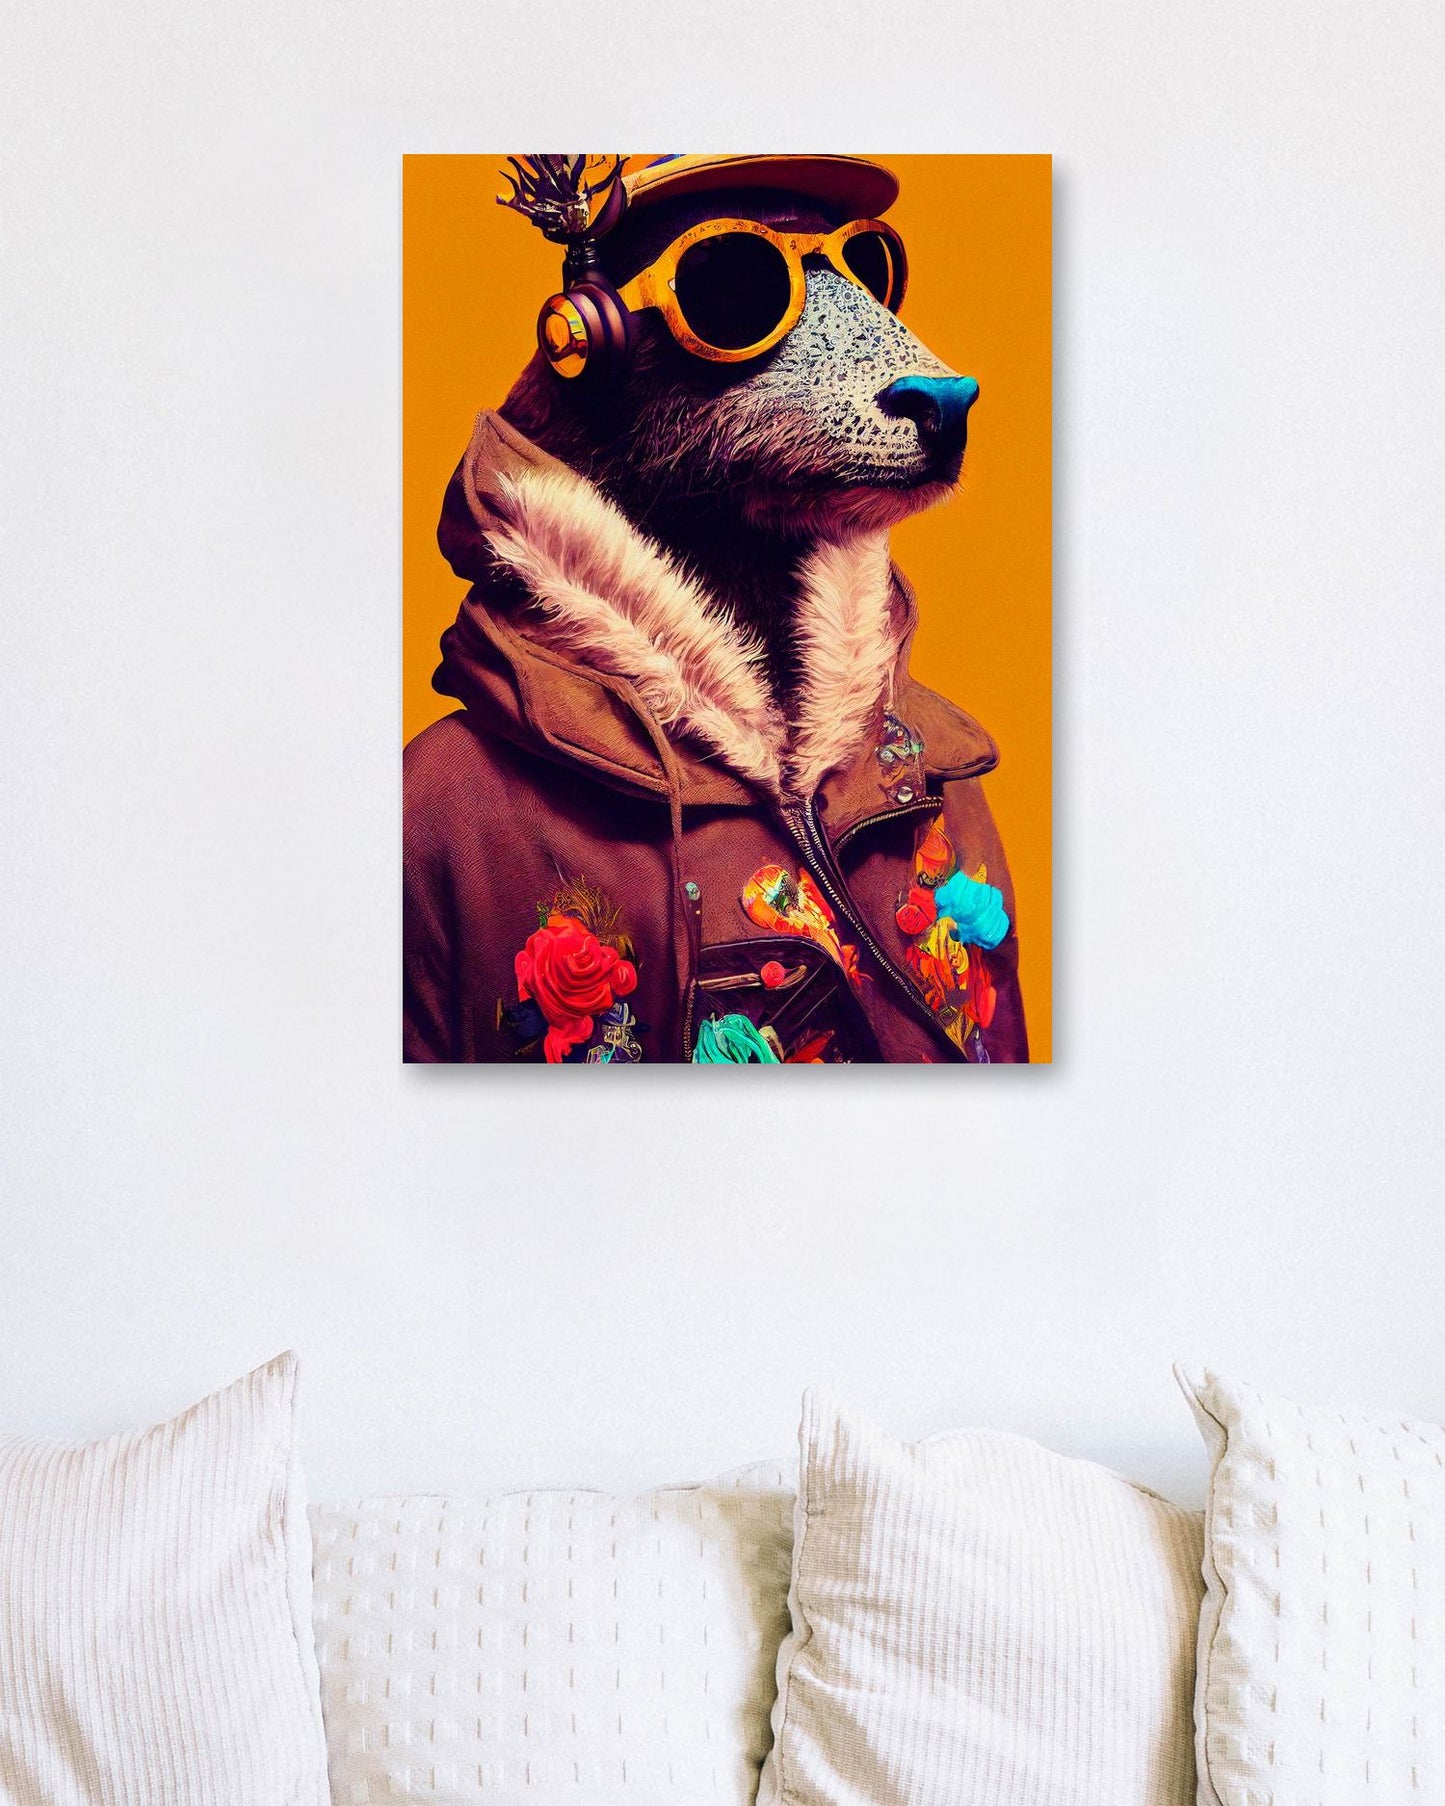 Cool dog portrait - @Artnesia